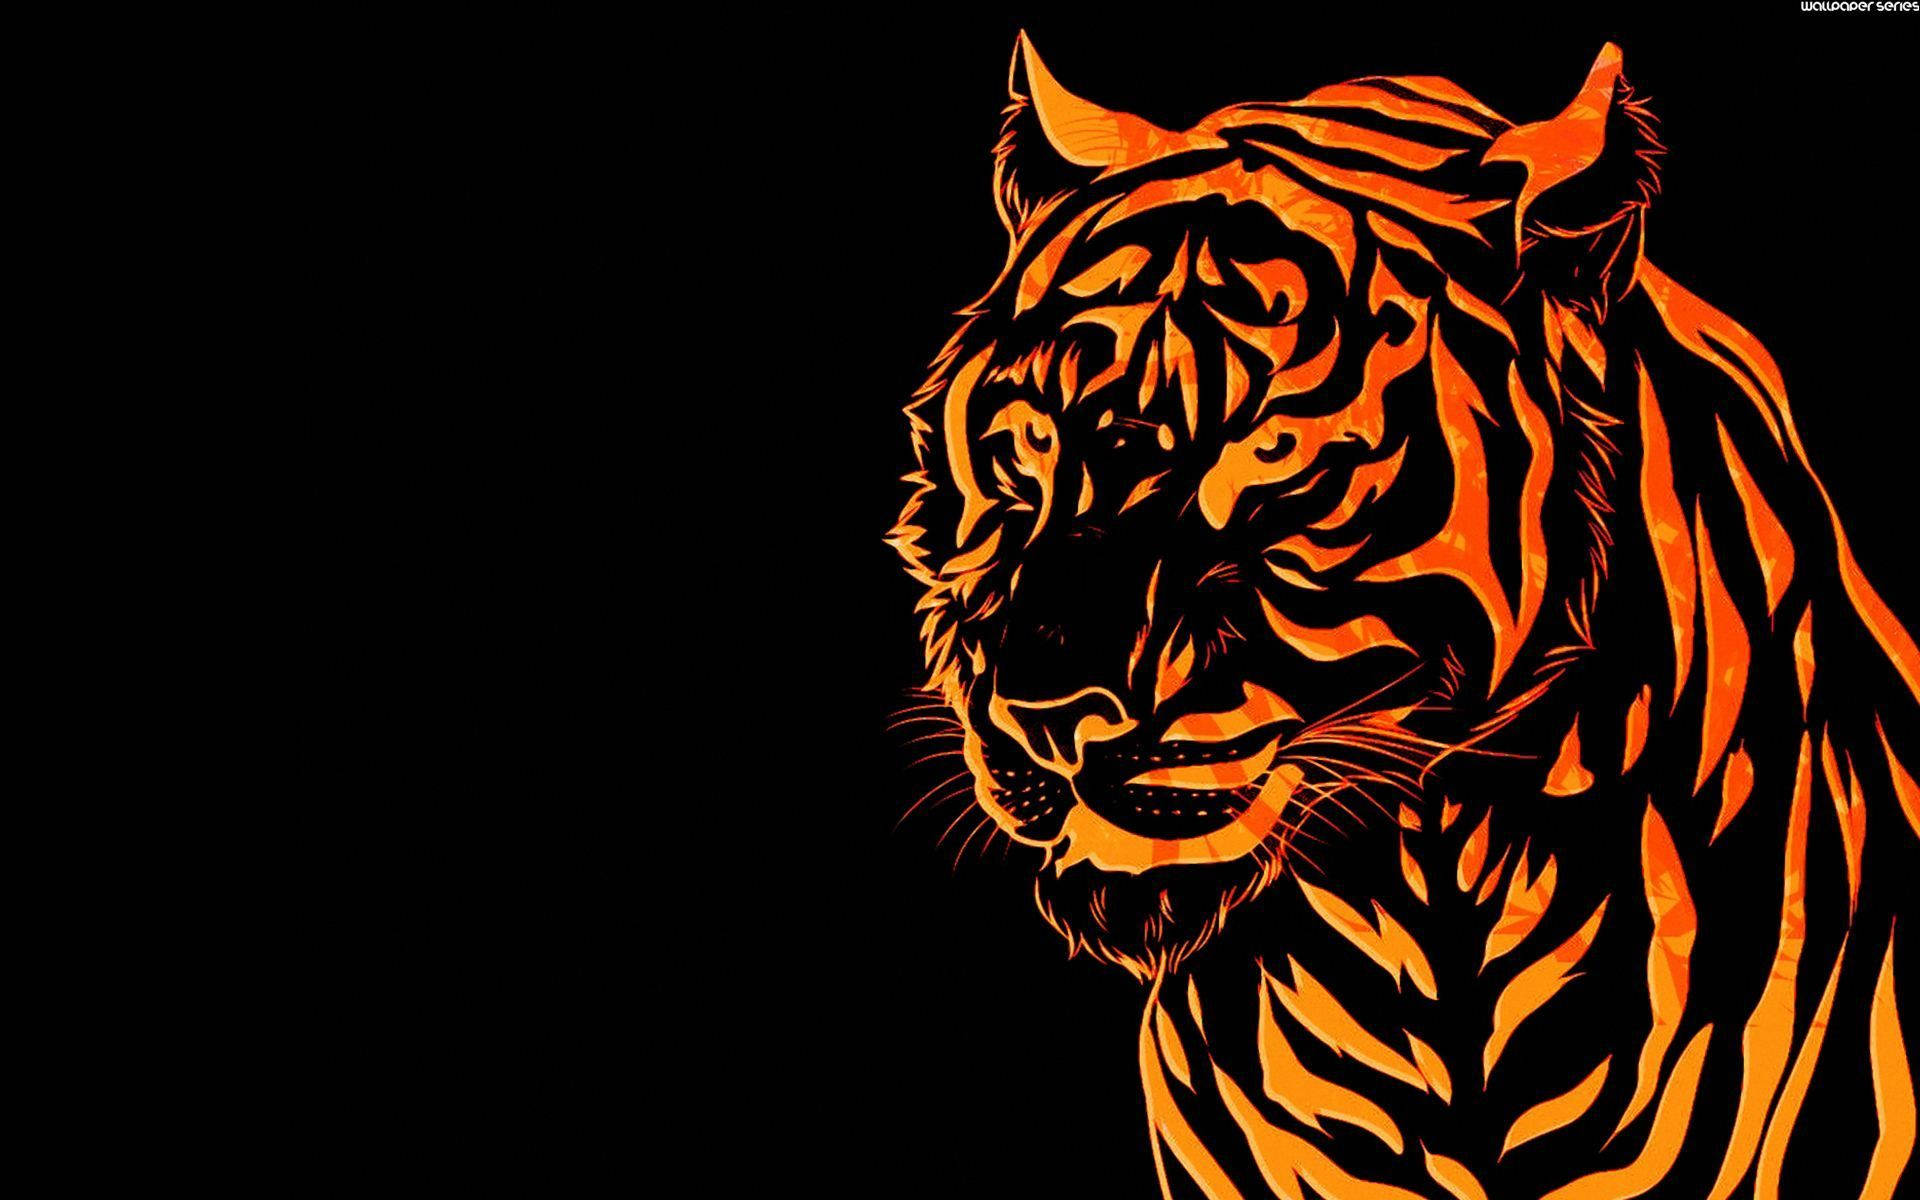 A majestic tiger artwork against a black background Wallpaper